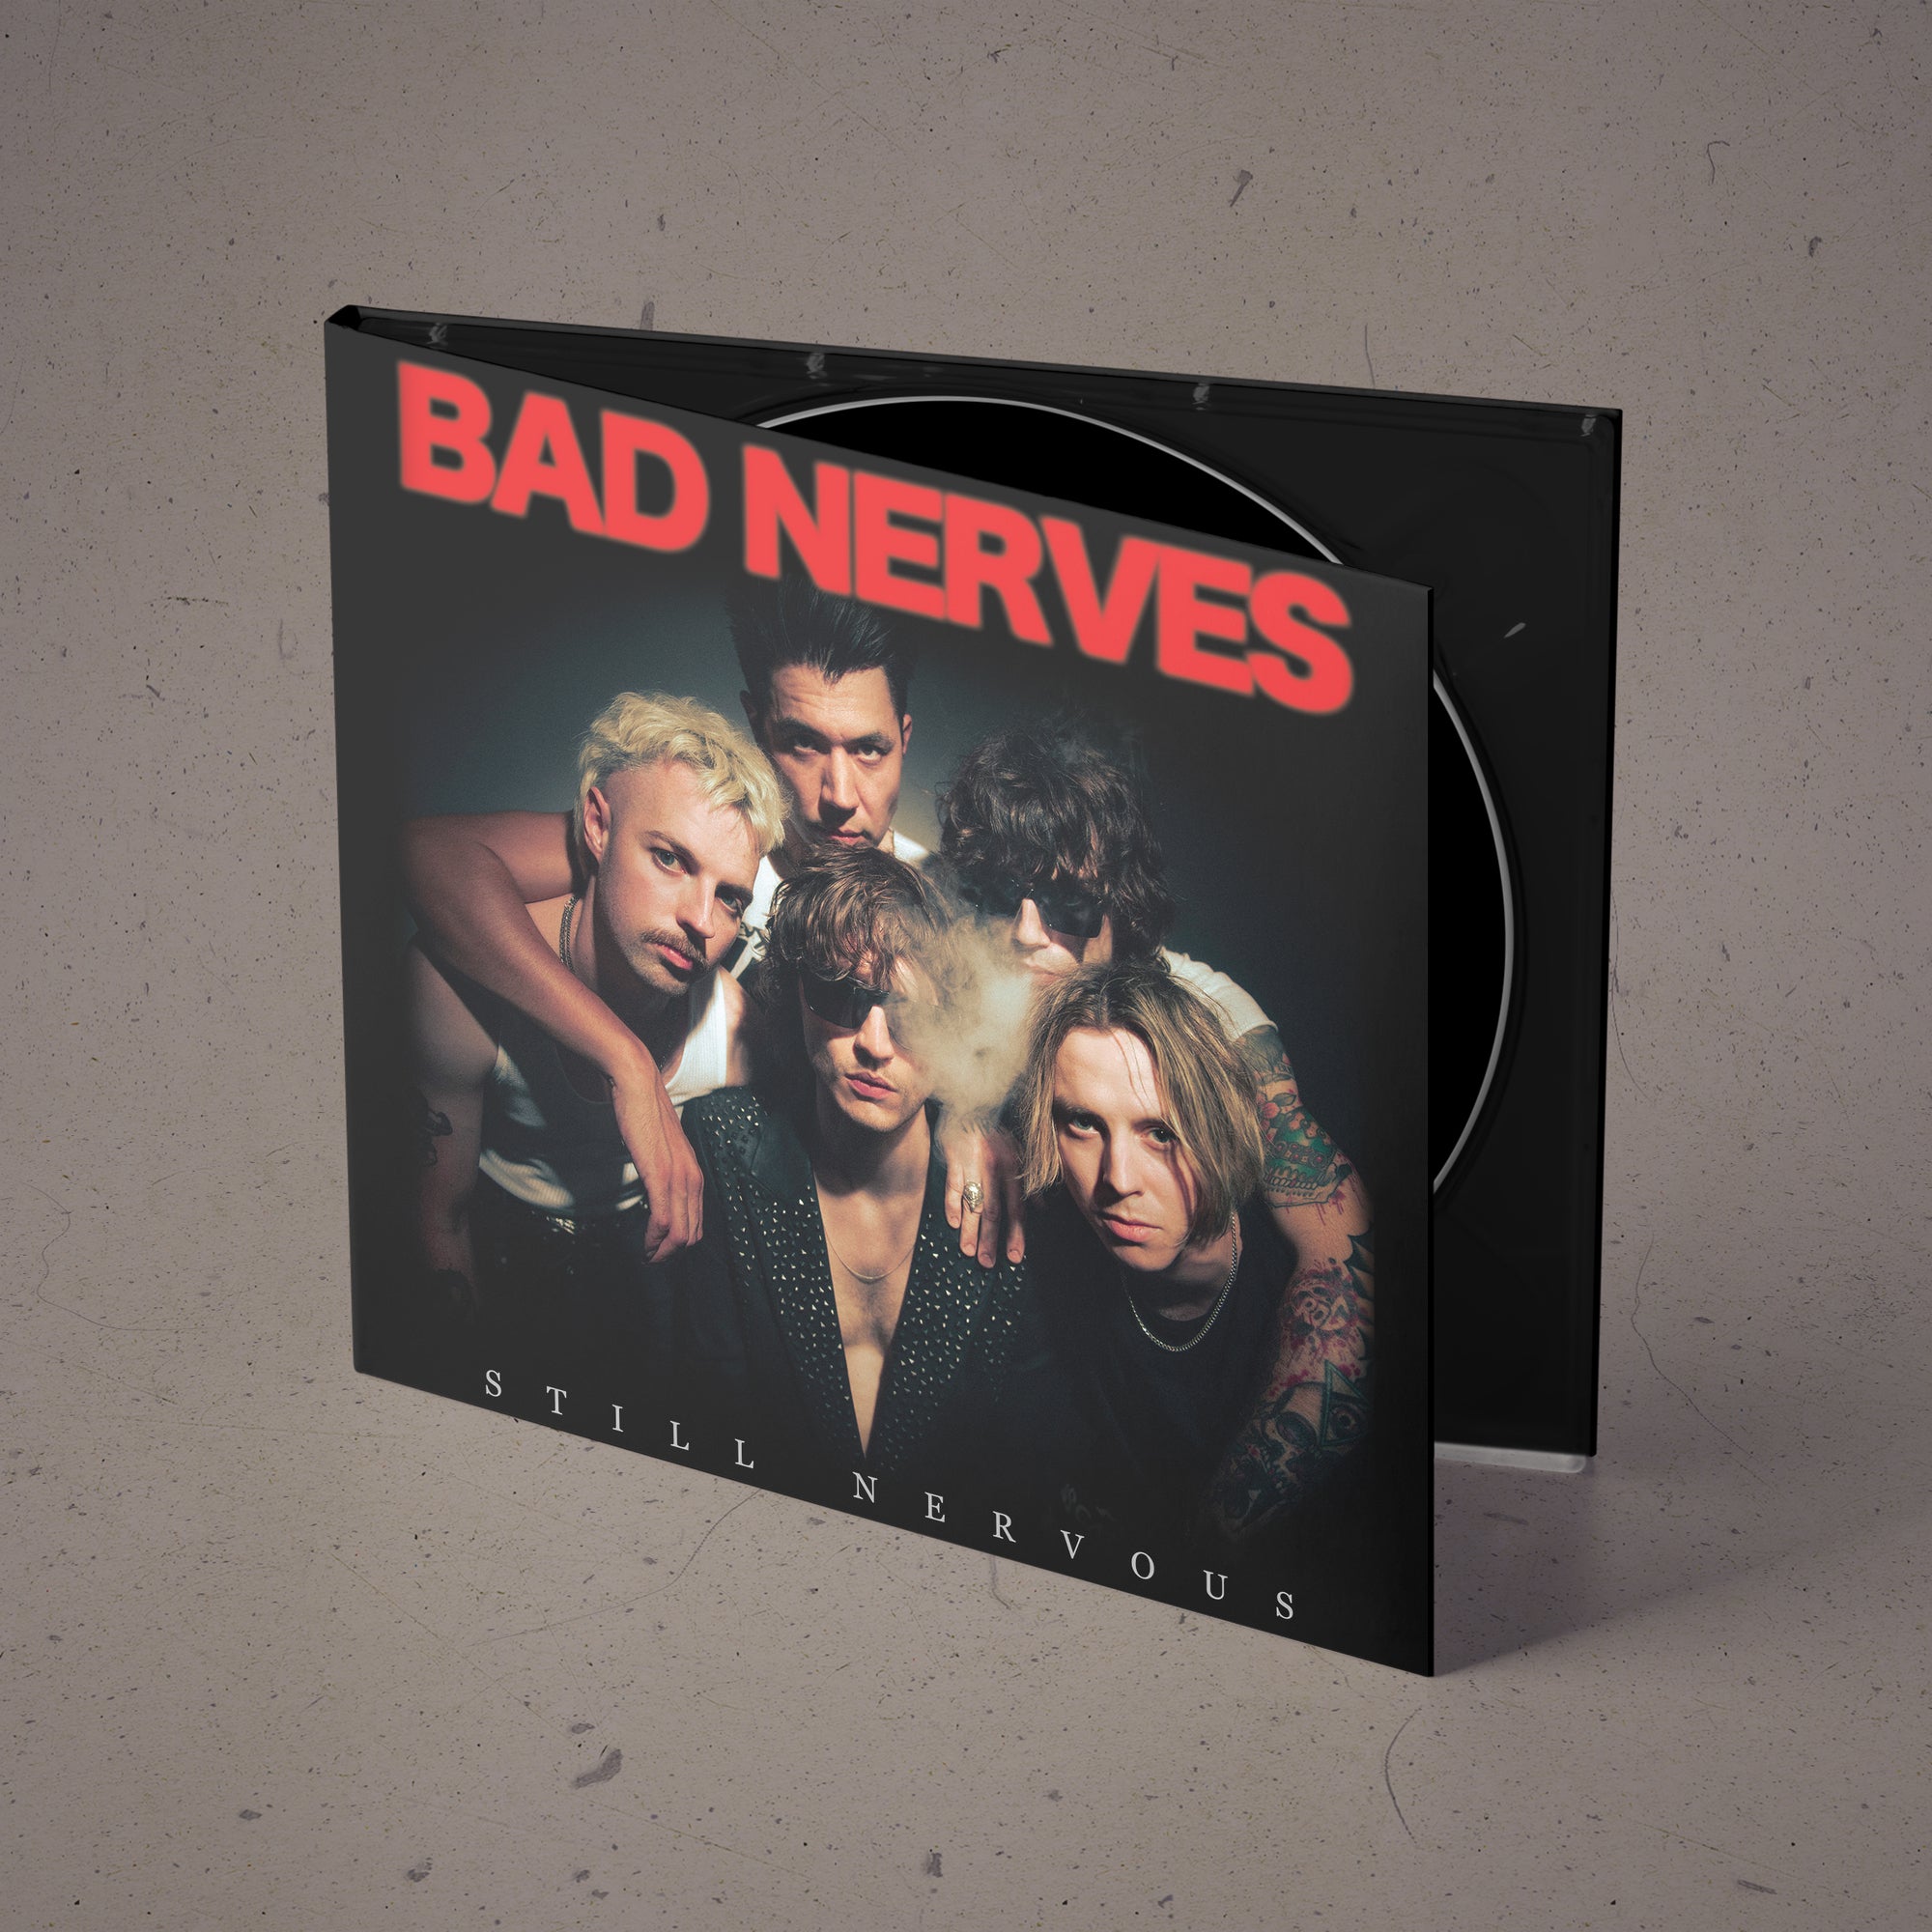 BAD NERVES - Still Nervous - CD [MAY 31]